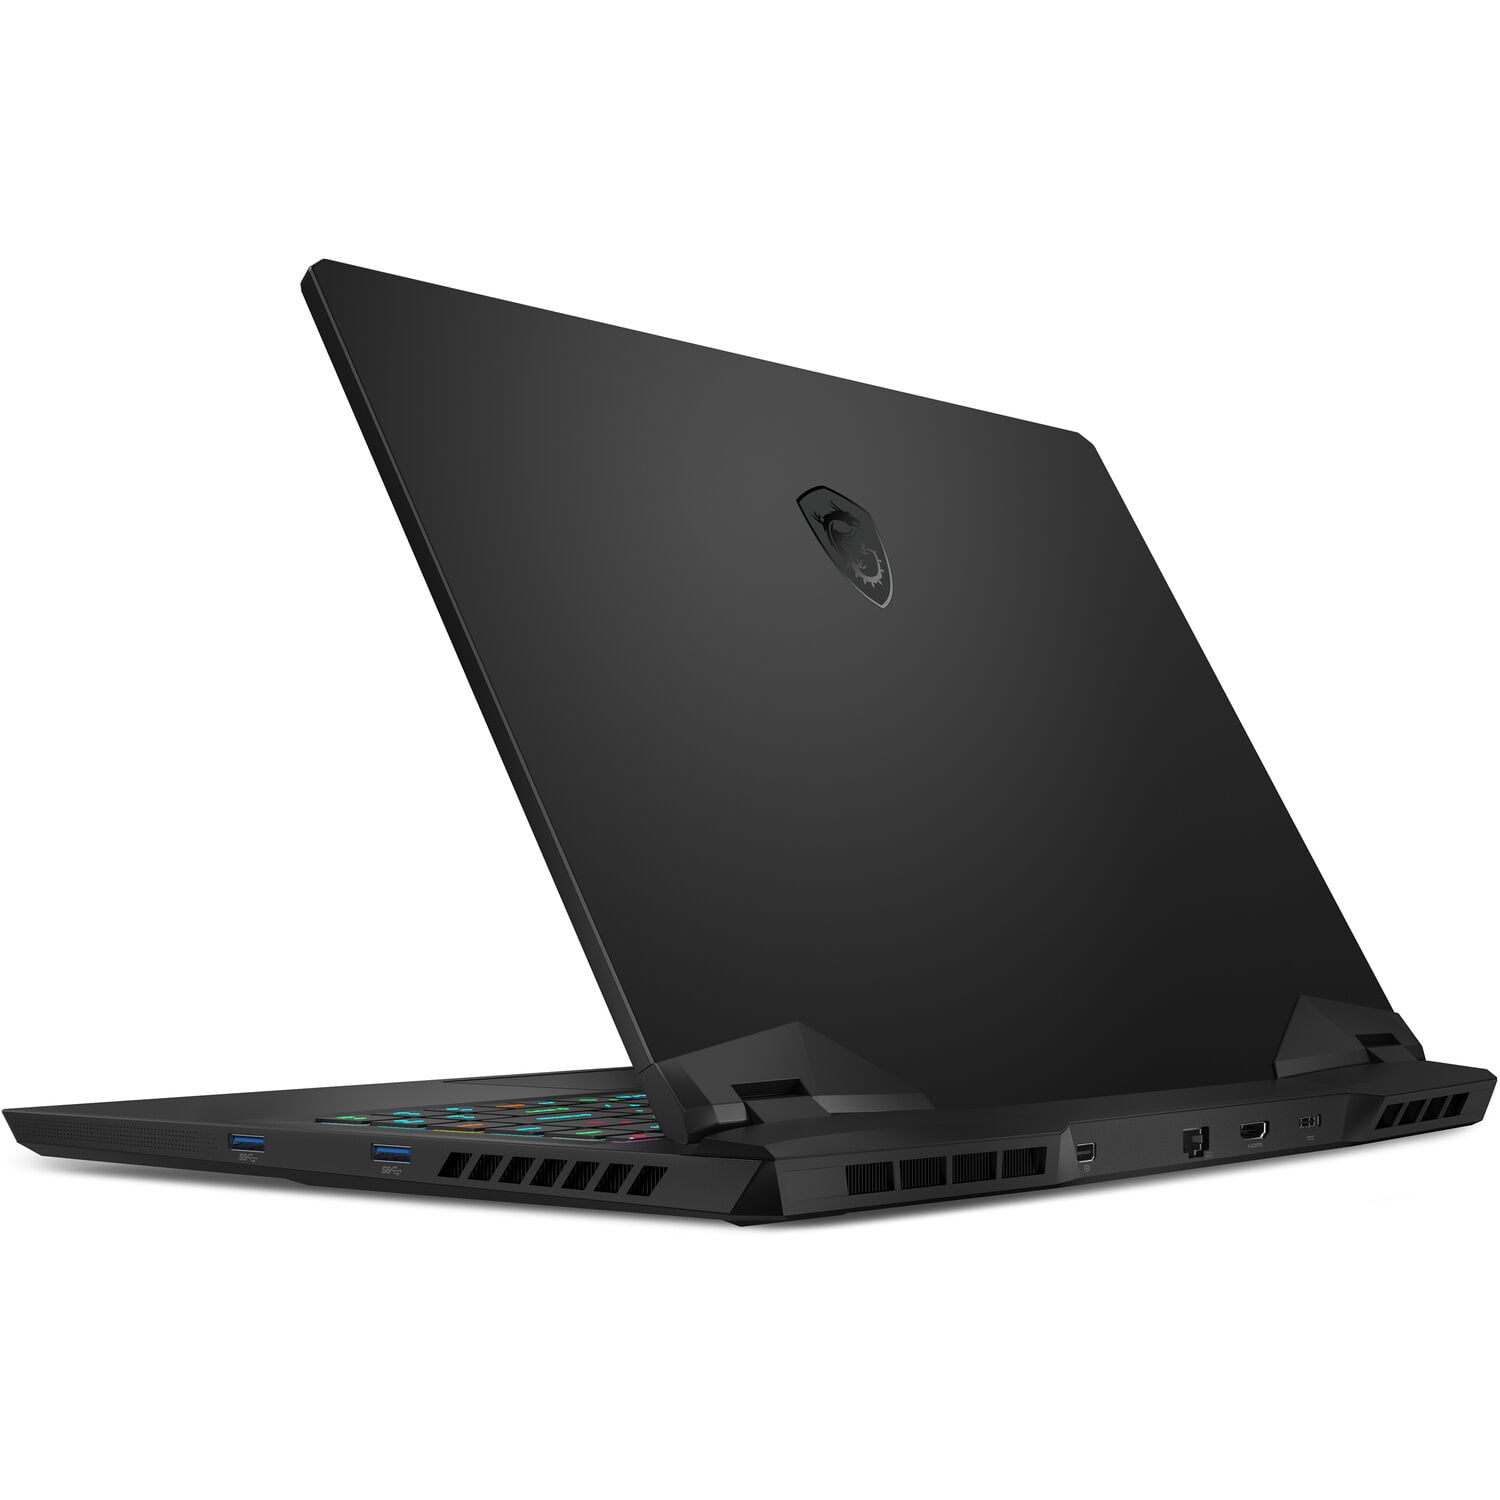 MSI GP66 Leopard Gaming/Entertainment Laptop (Intel i7-11800H 8-Core